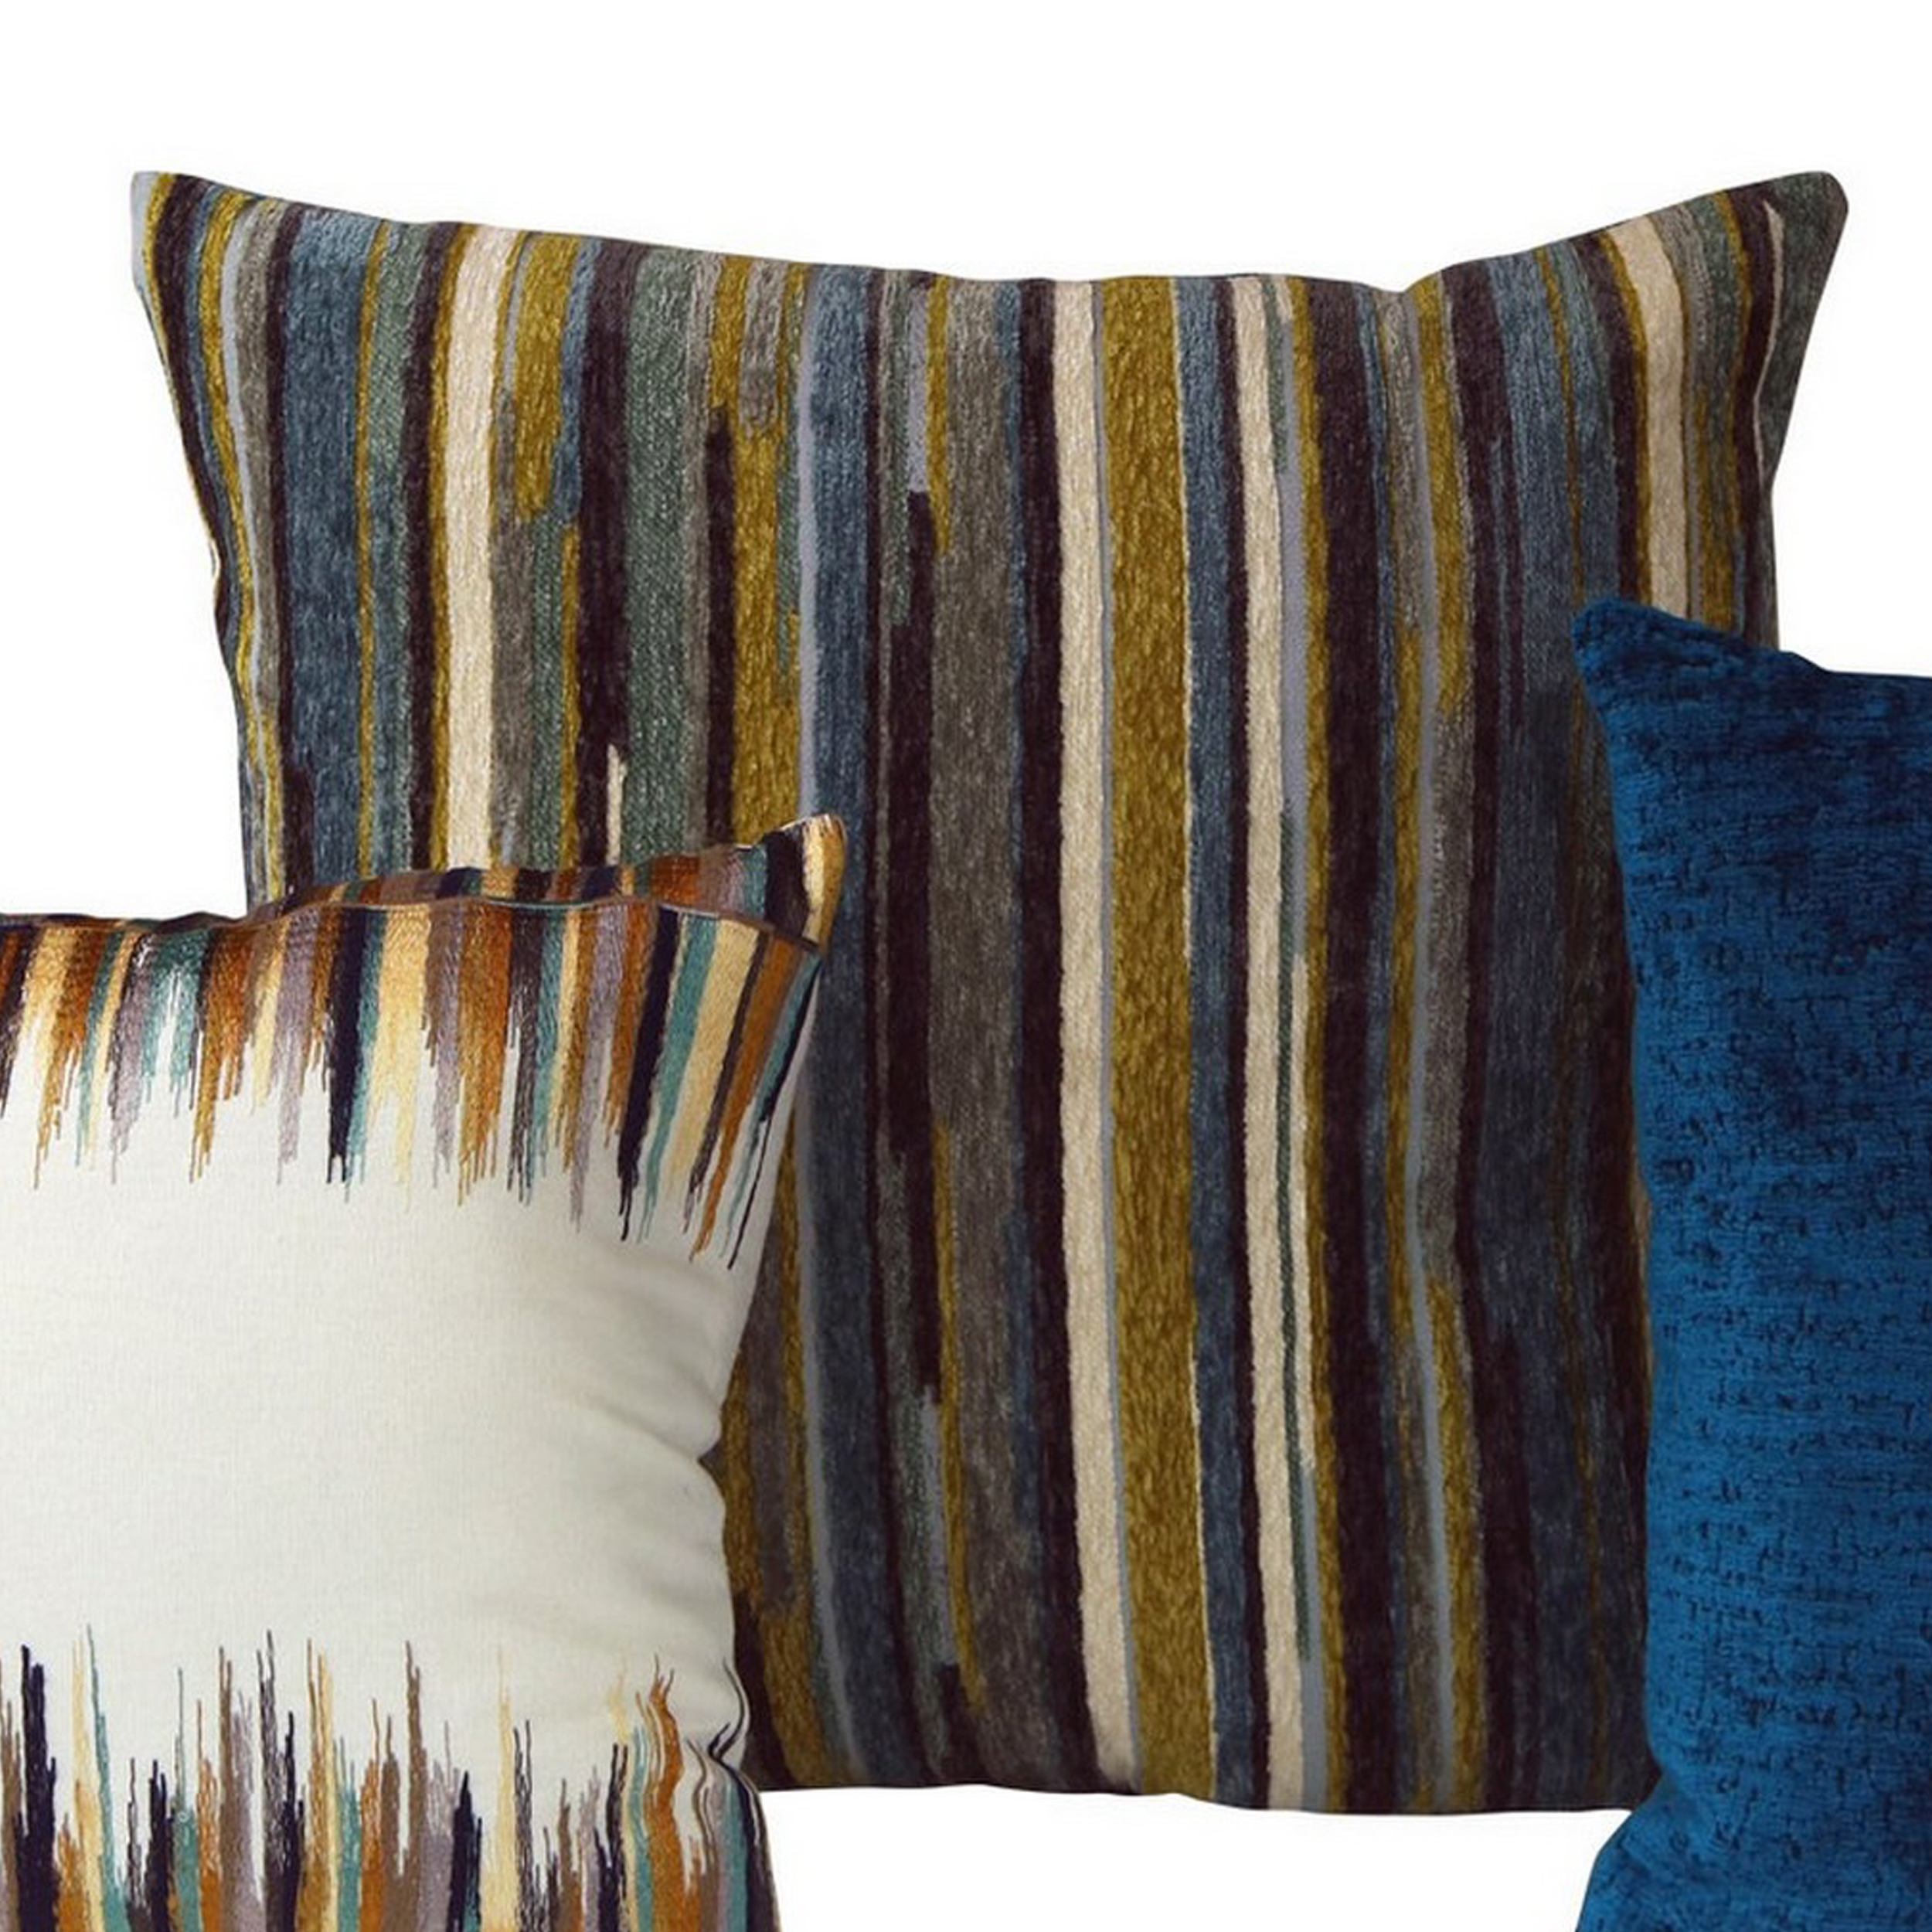 3 Modern Accent Throw Pillows, Polyester, Chenile Stripes, Multicolor - Saltoro Sherpi